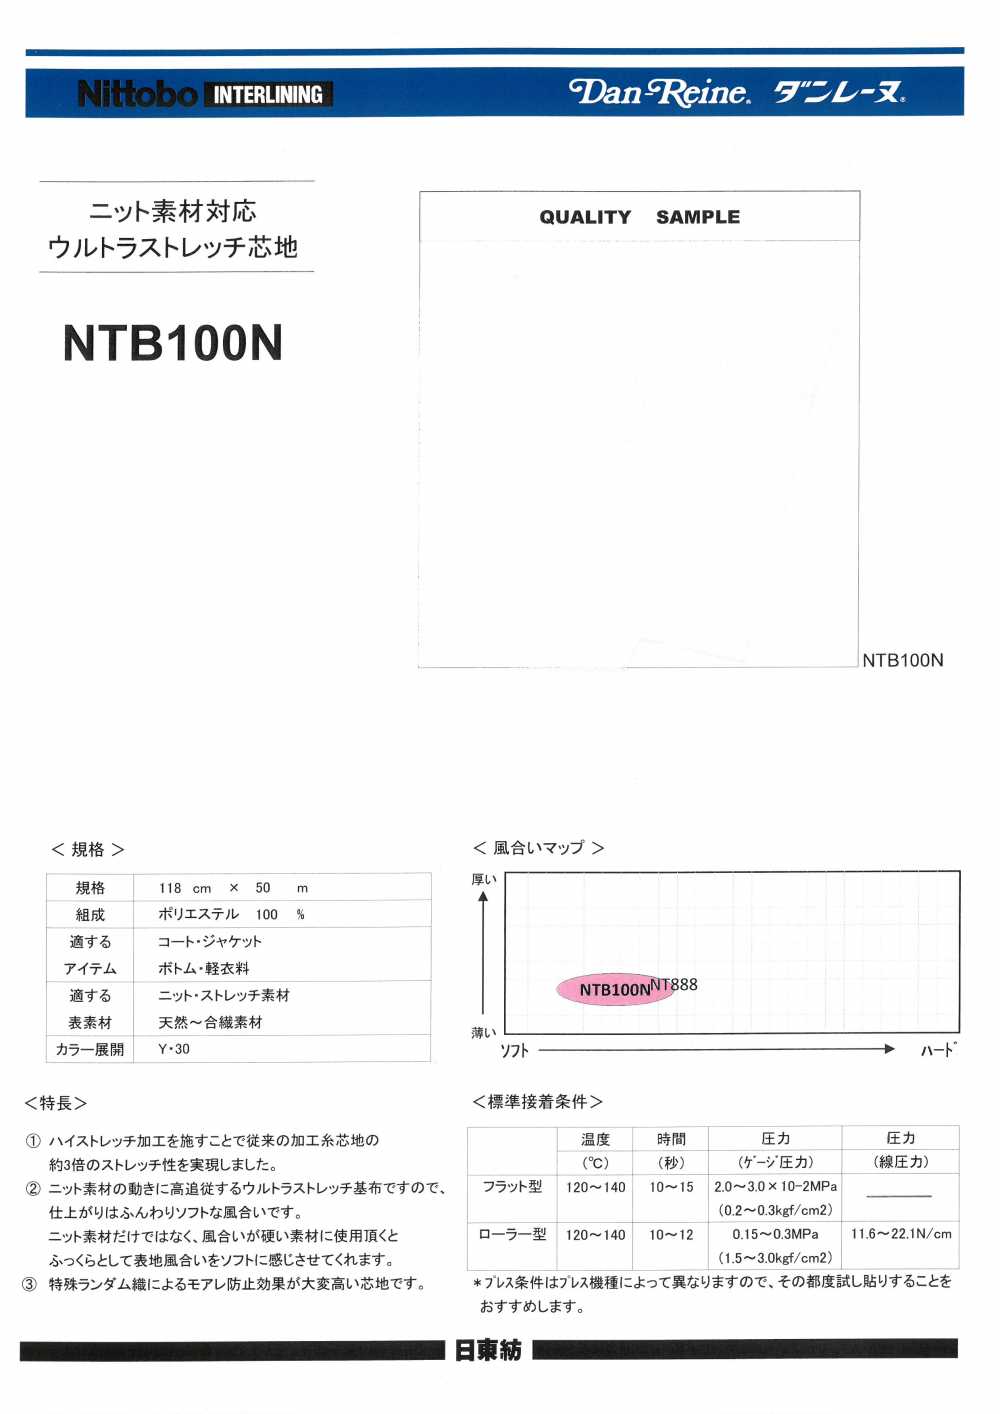 NTB100N ニット素材対応 ウルトラストレッチ芯地 15D 日東紡インターライニング